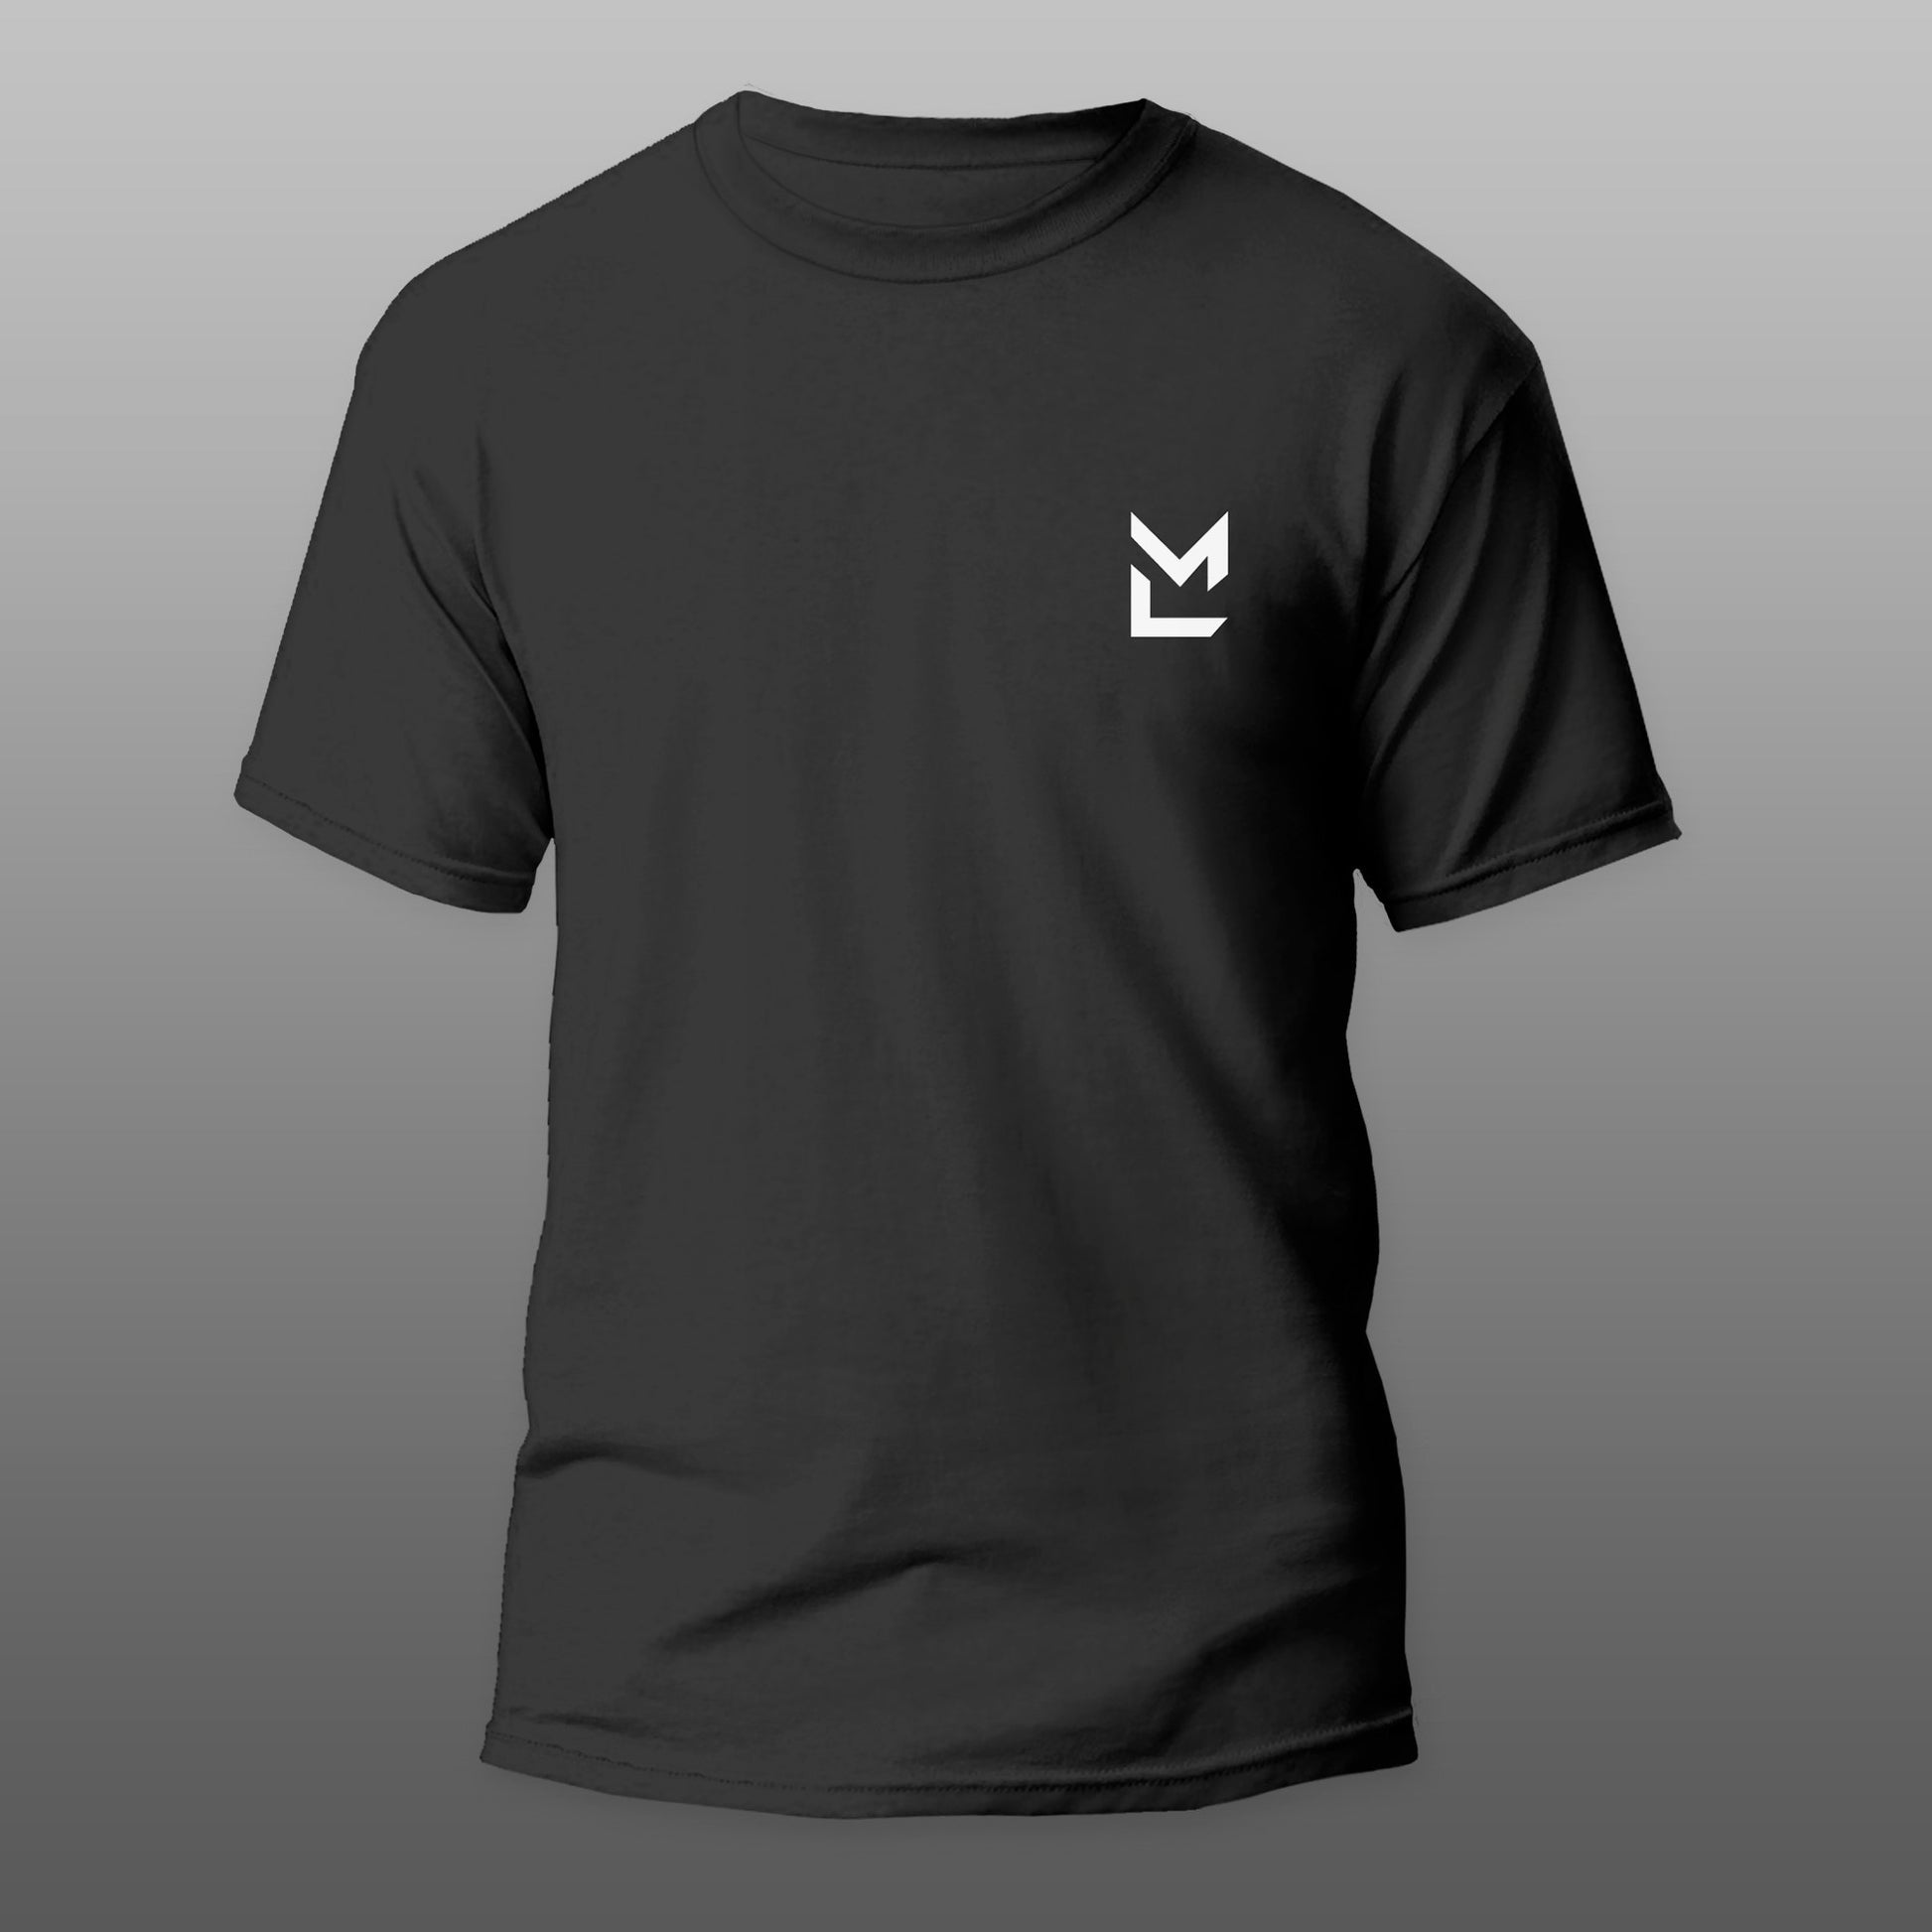 MetaLaunchers Shirt Black Front